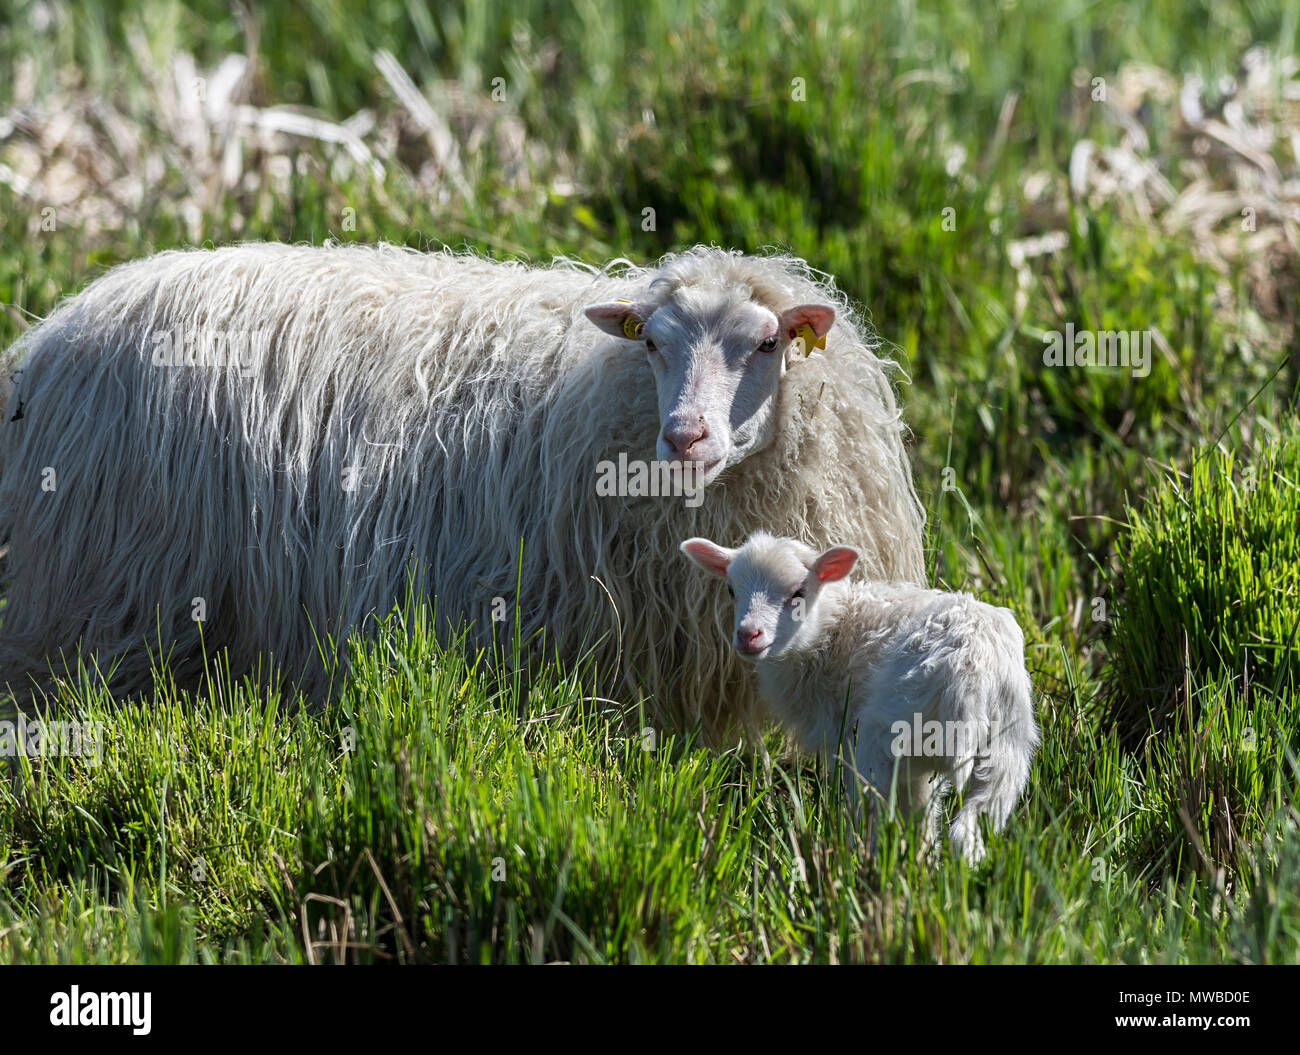 White Polled Heath sheep (Ovis aries) with her newborn in dense grass, Mecklenburg-Western Pomerania, Germany Stock Photo